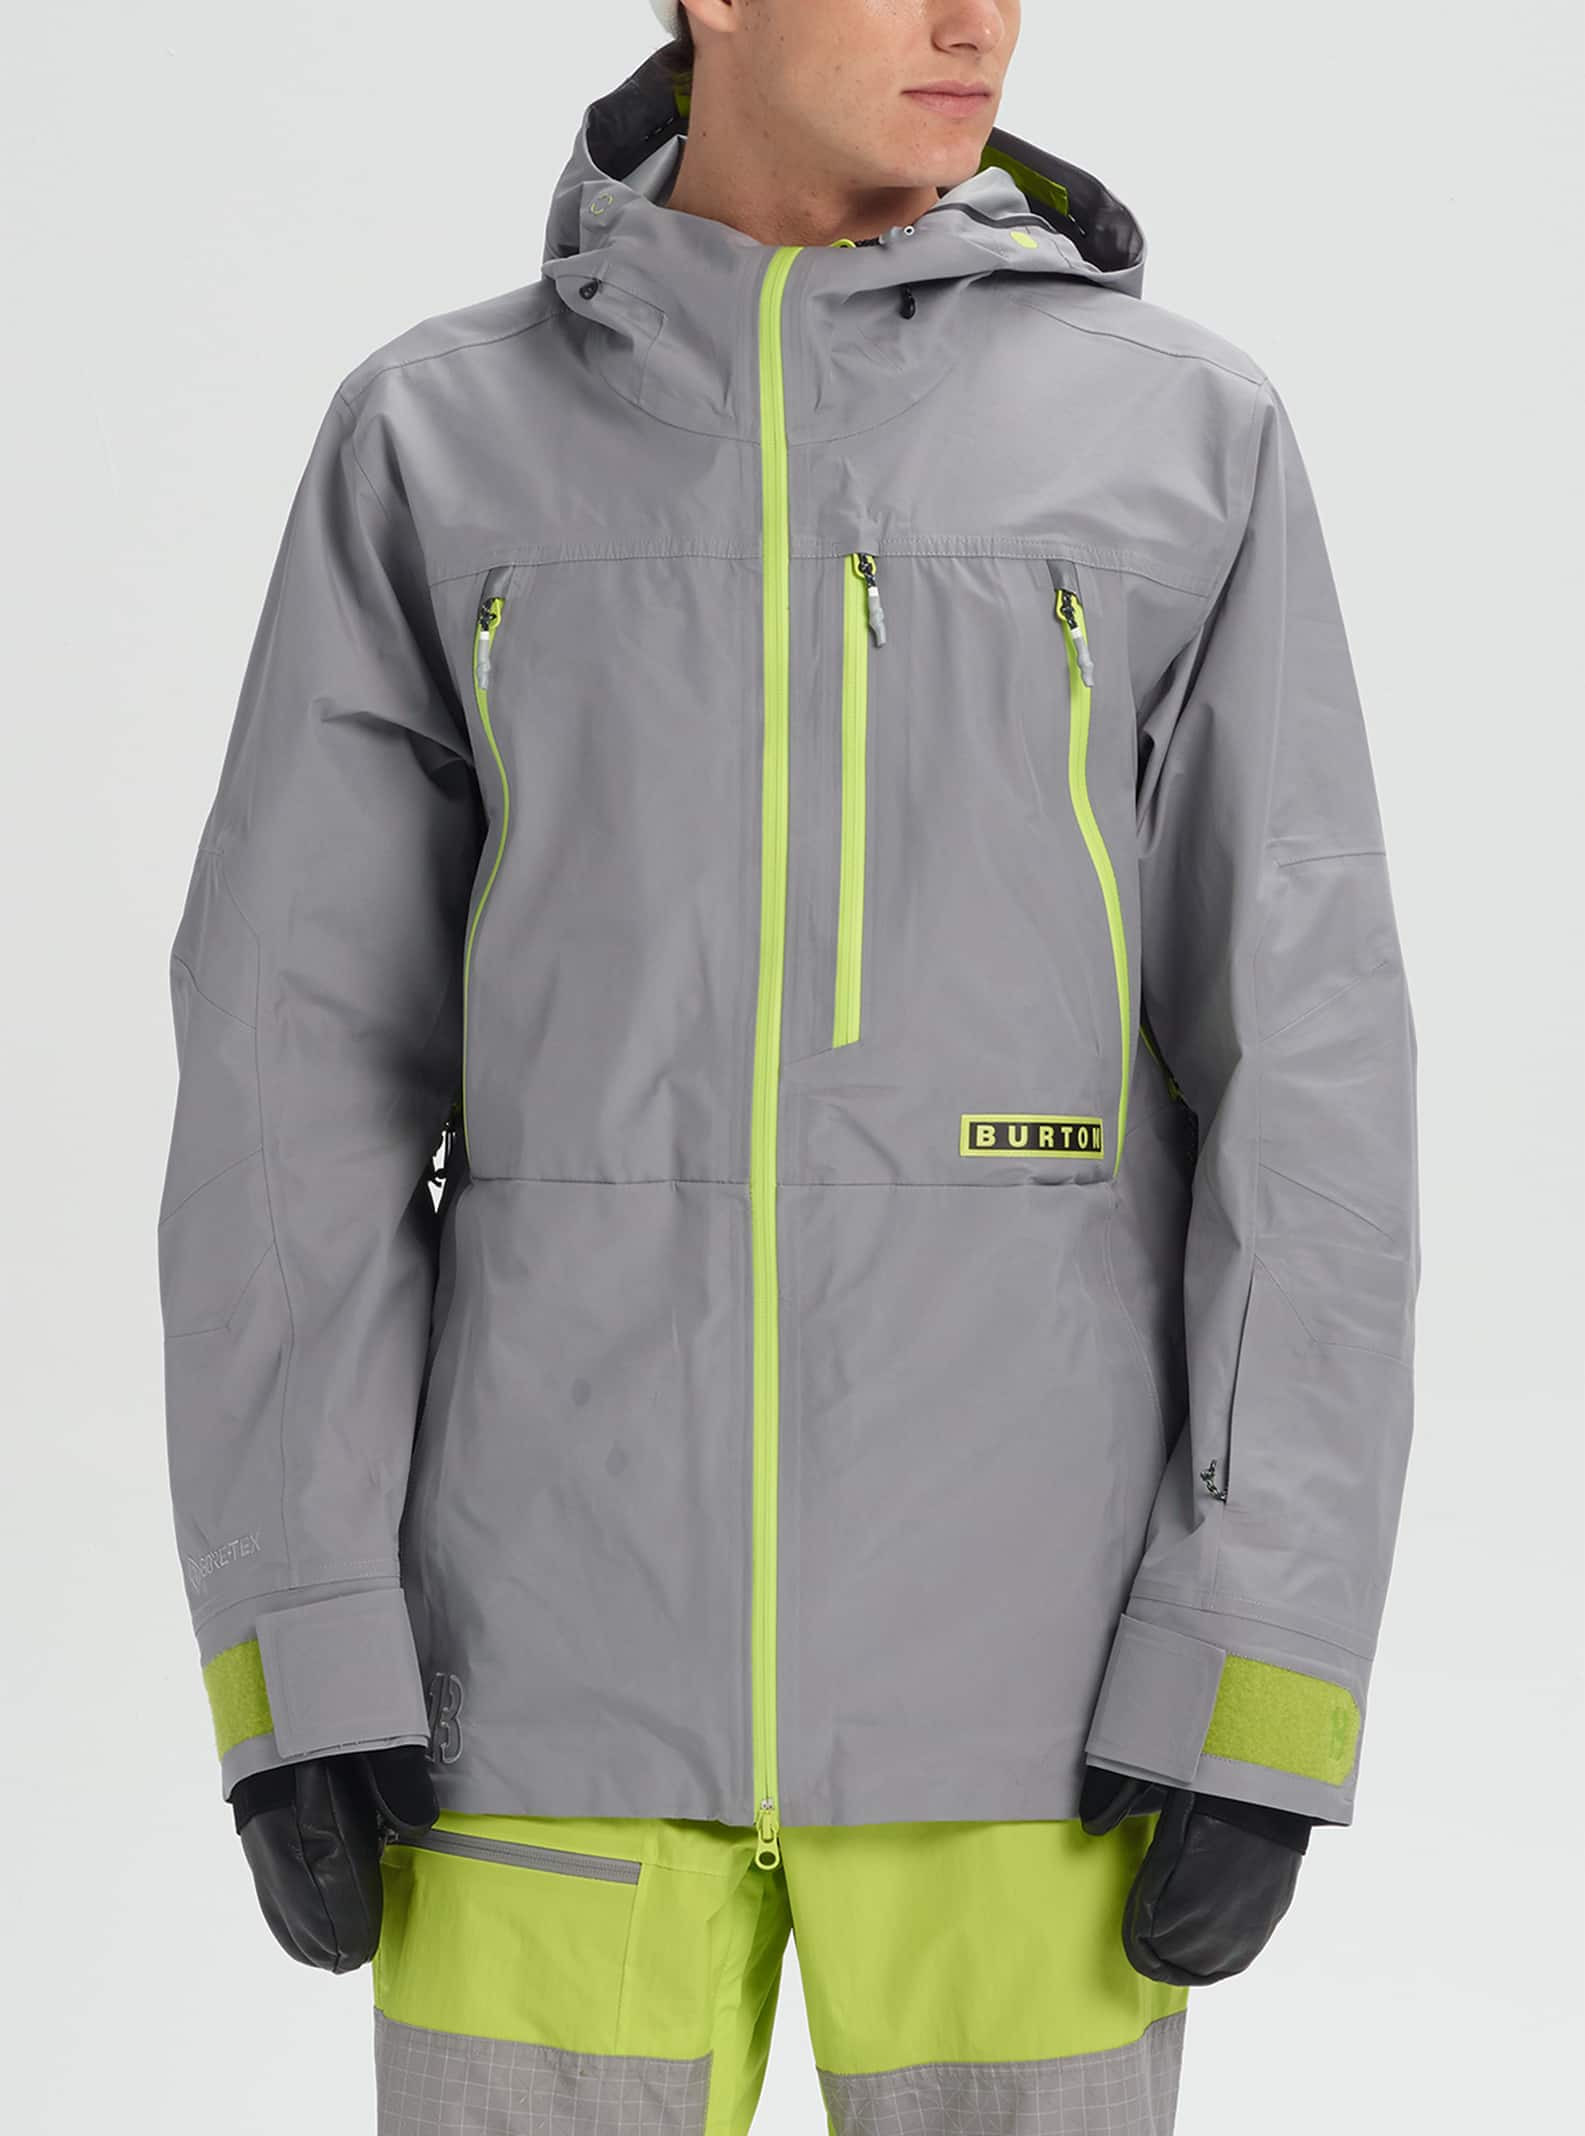 Men's Burton GORE-TEX 3L Frostner Jacket | Burton.com Winter 2020 PT